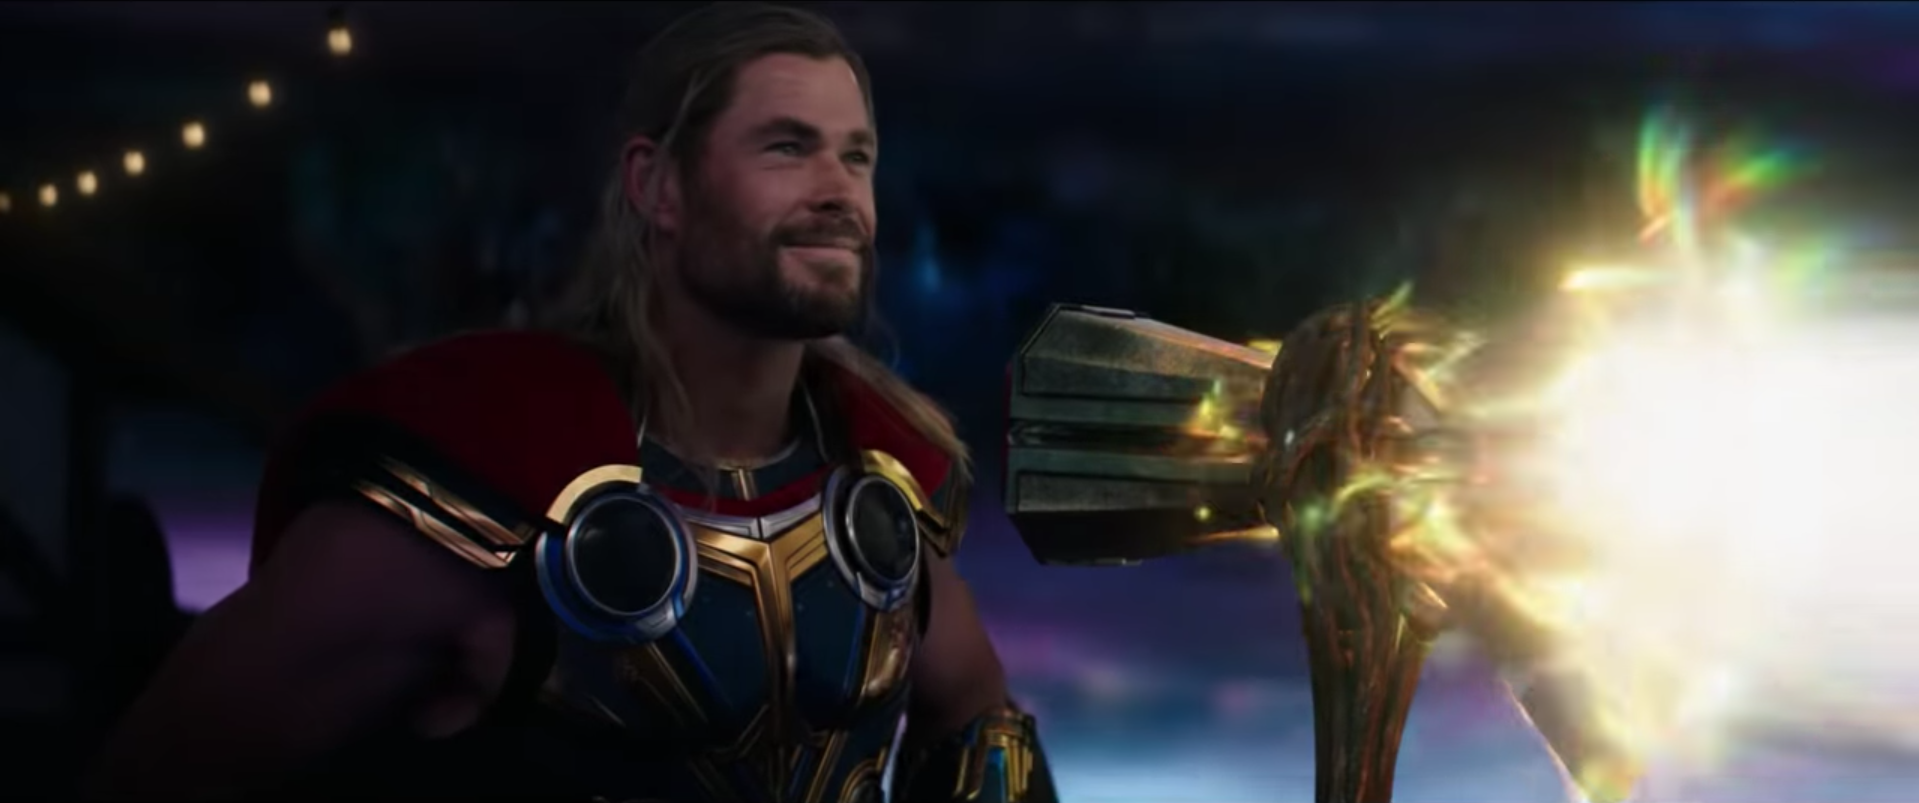 Checa por acá el primer teaser de 'Thor: Love and Thunder' con Natalie Portman